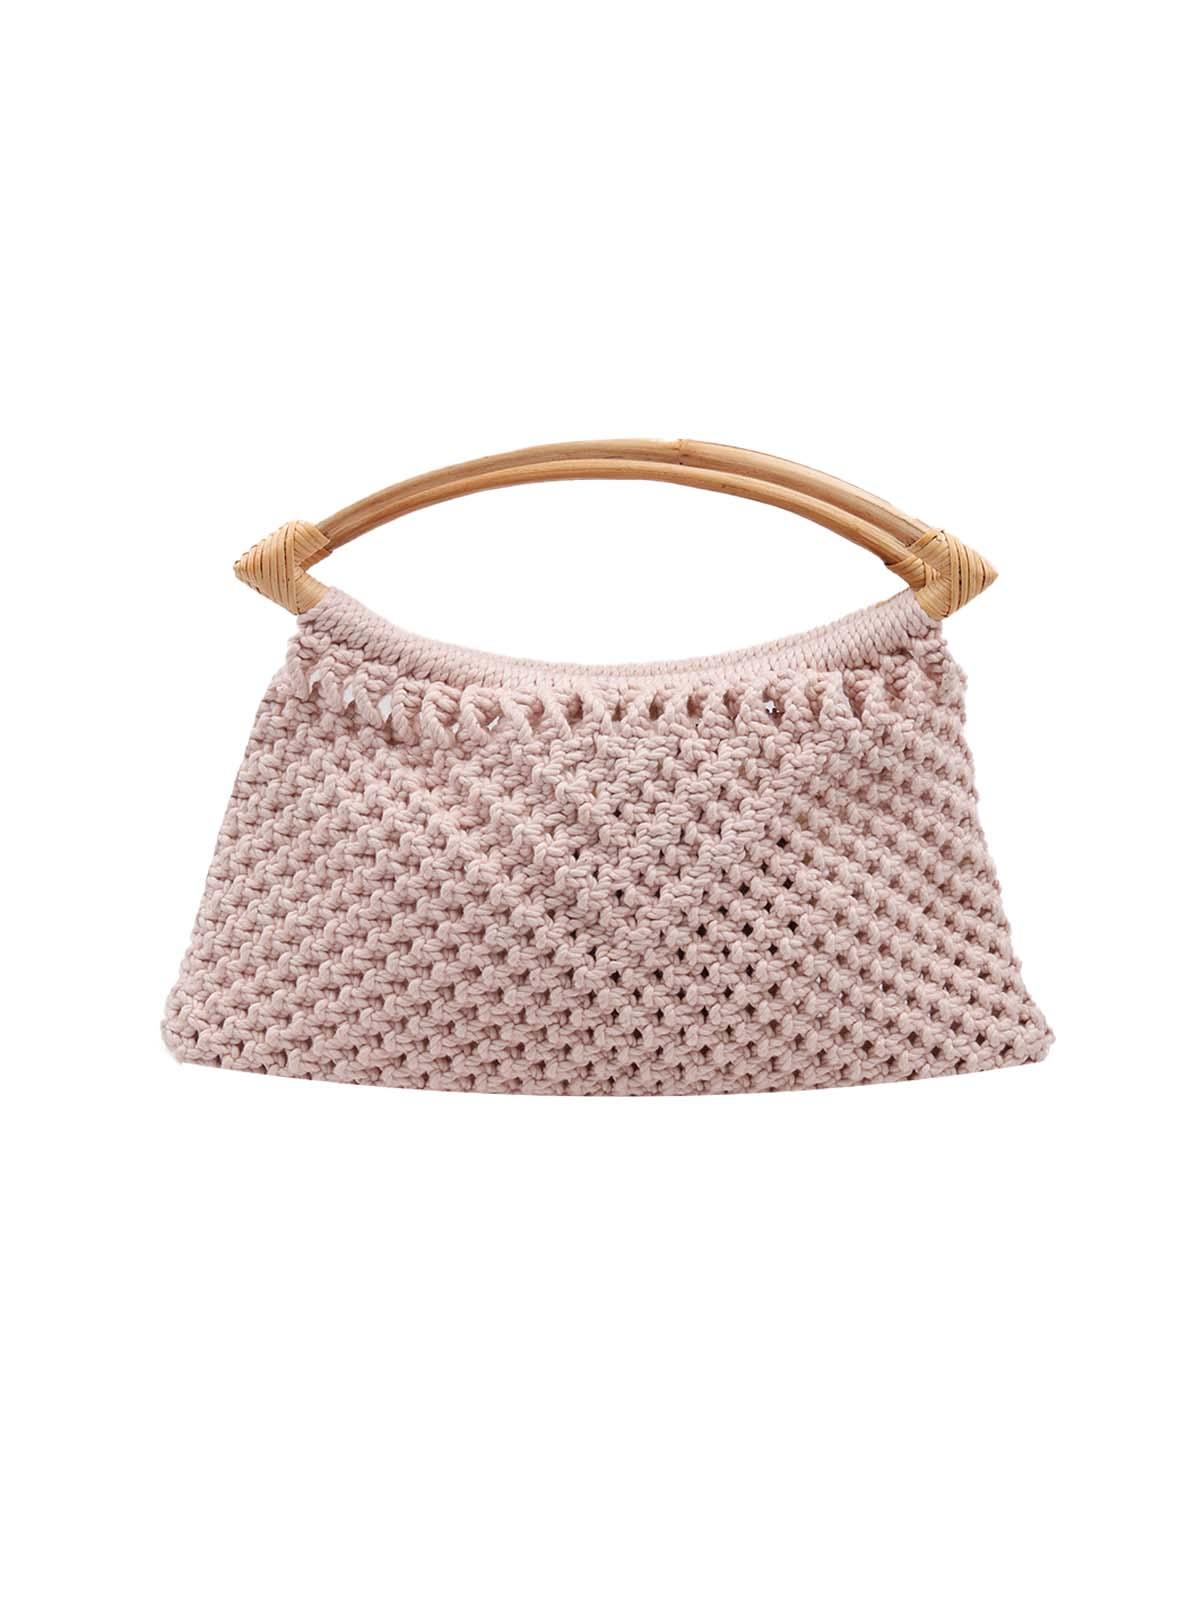 Stunning crochet baby pink handle bag - Odette